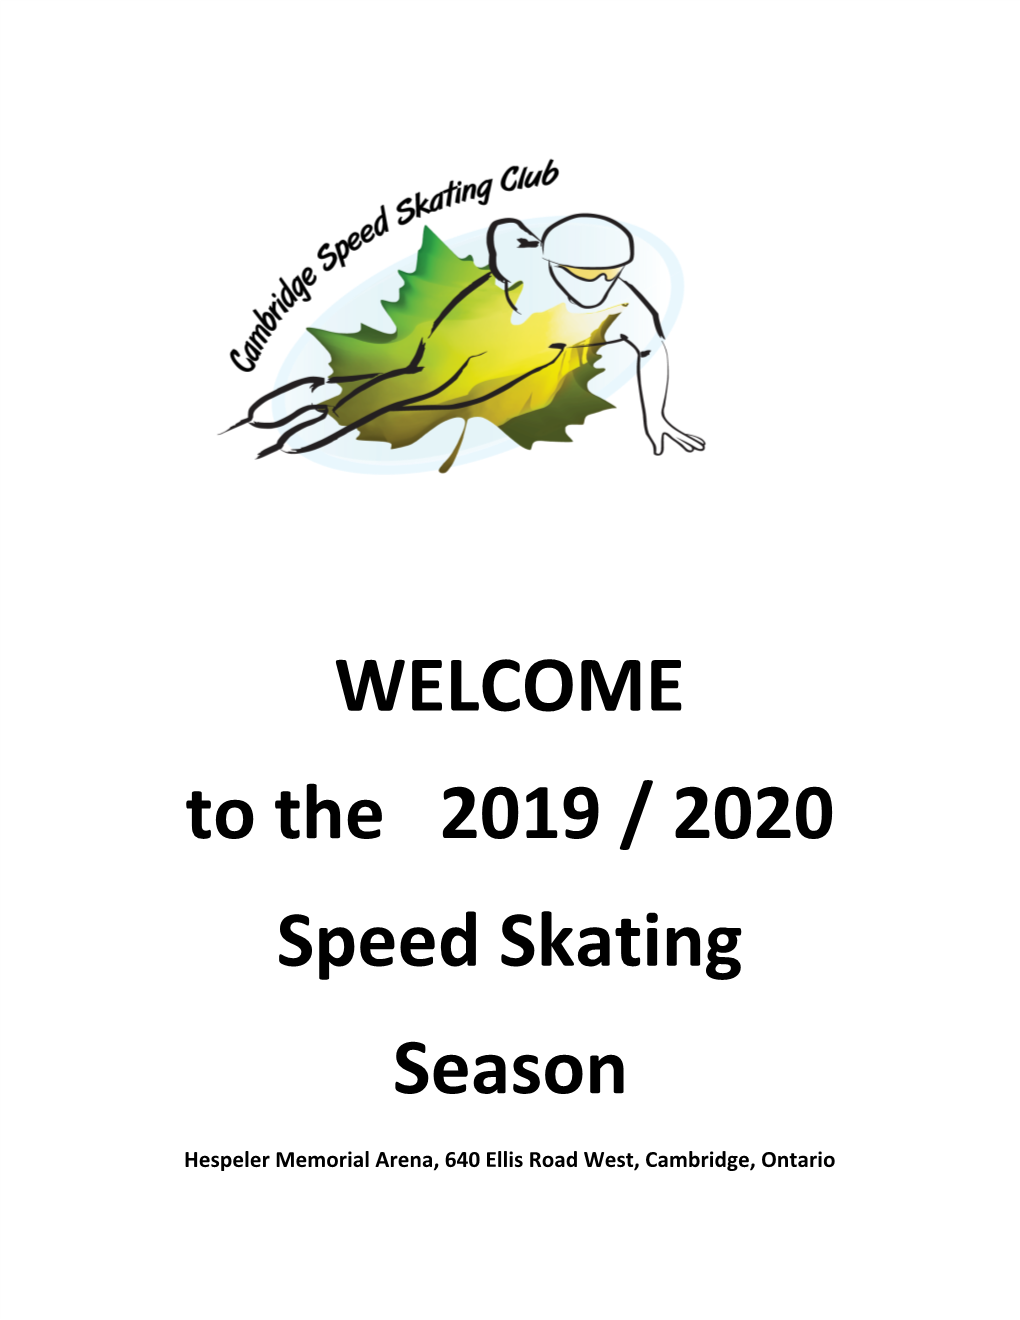 The 2019 / 2020 Speed Skating Season